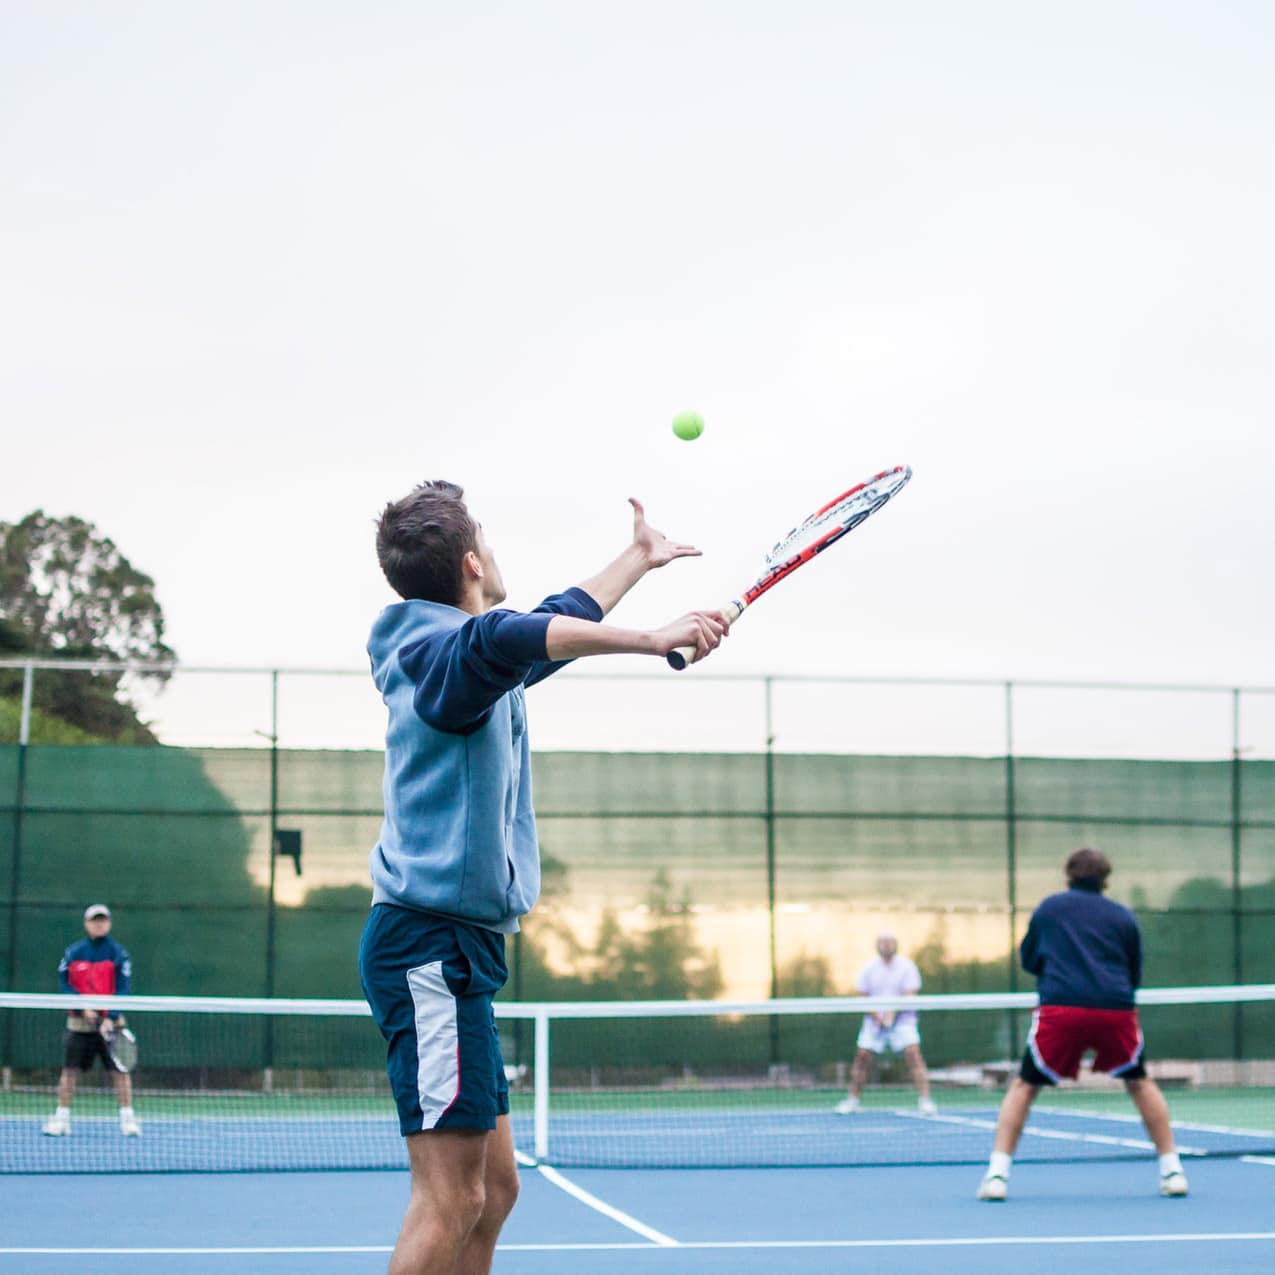 testosterone optimization results trt tennis playing